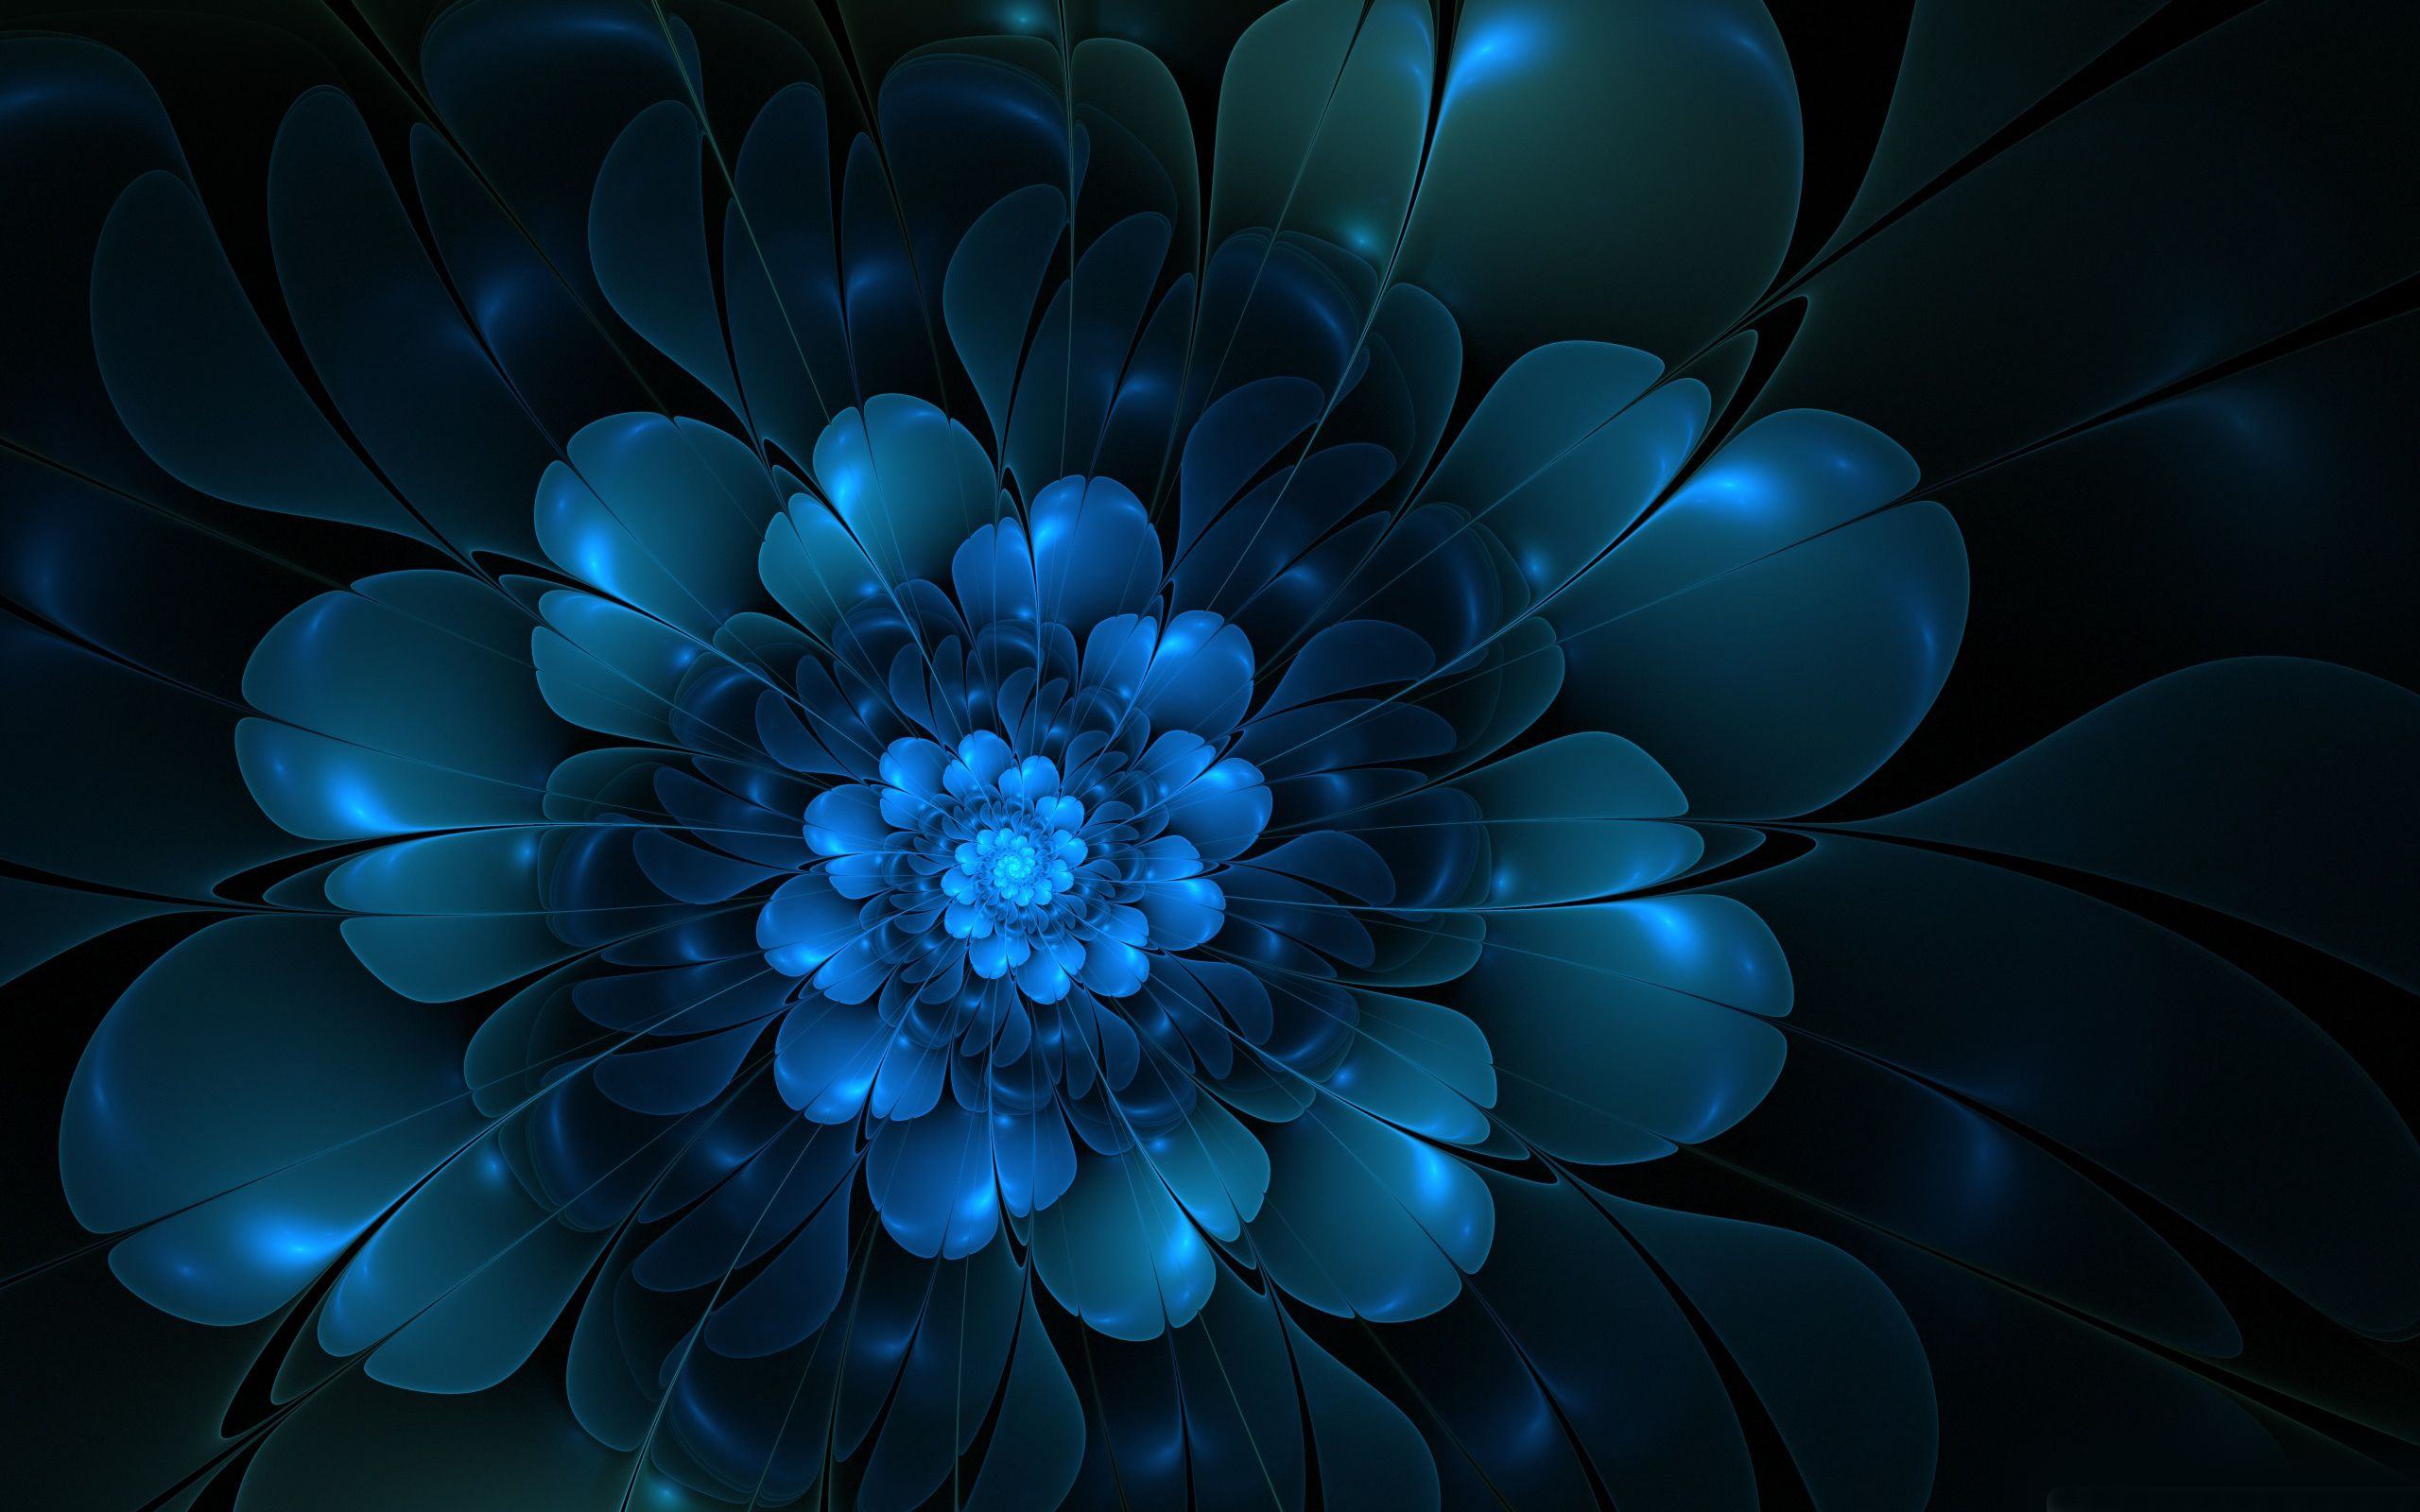 fond d'écran bleu téléchargement hd,bleu,art fractal,bleu cobalt,bleu électrique,pétale